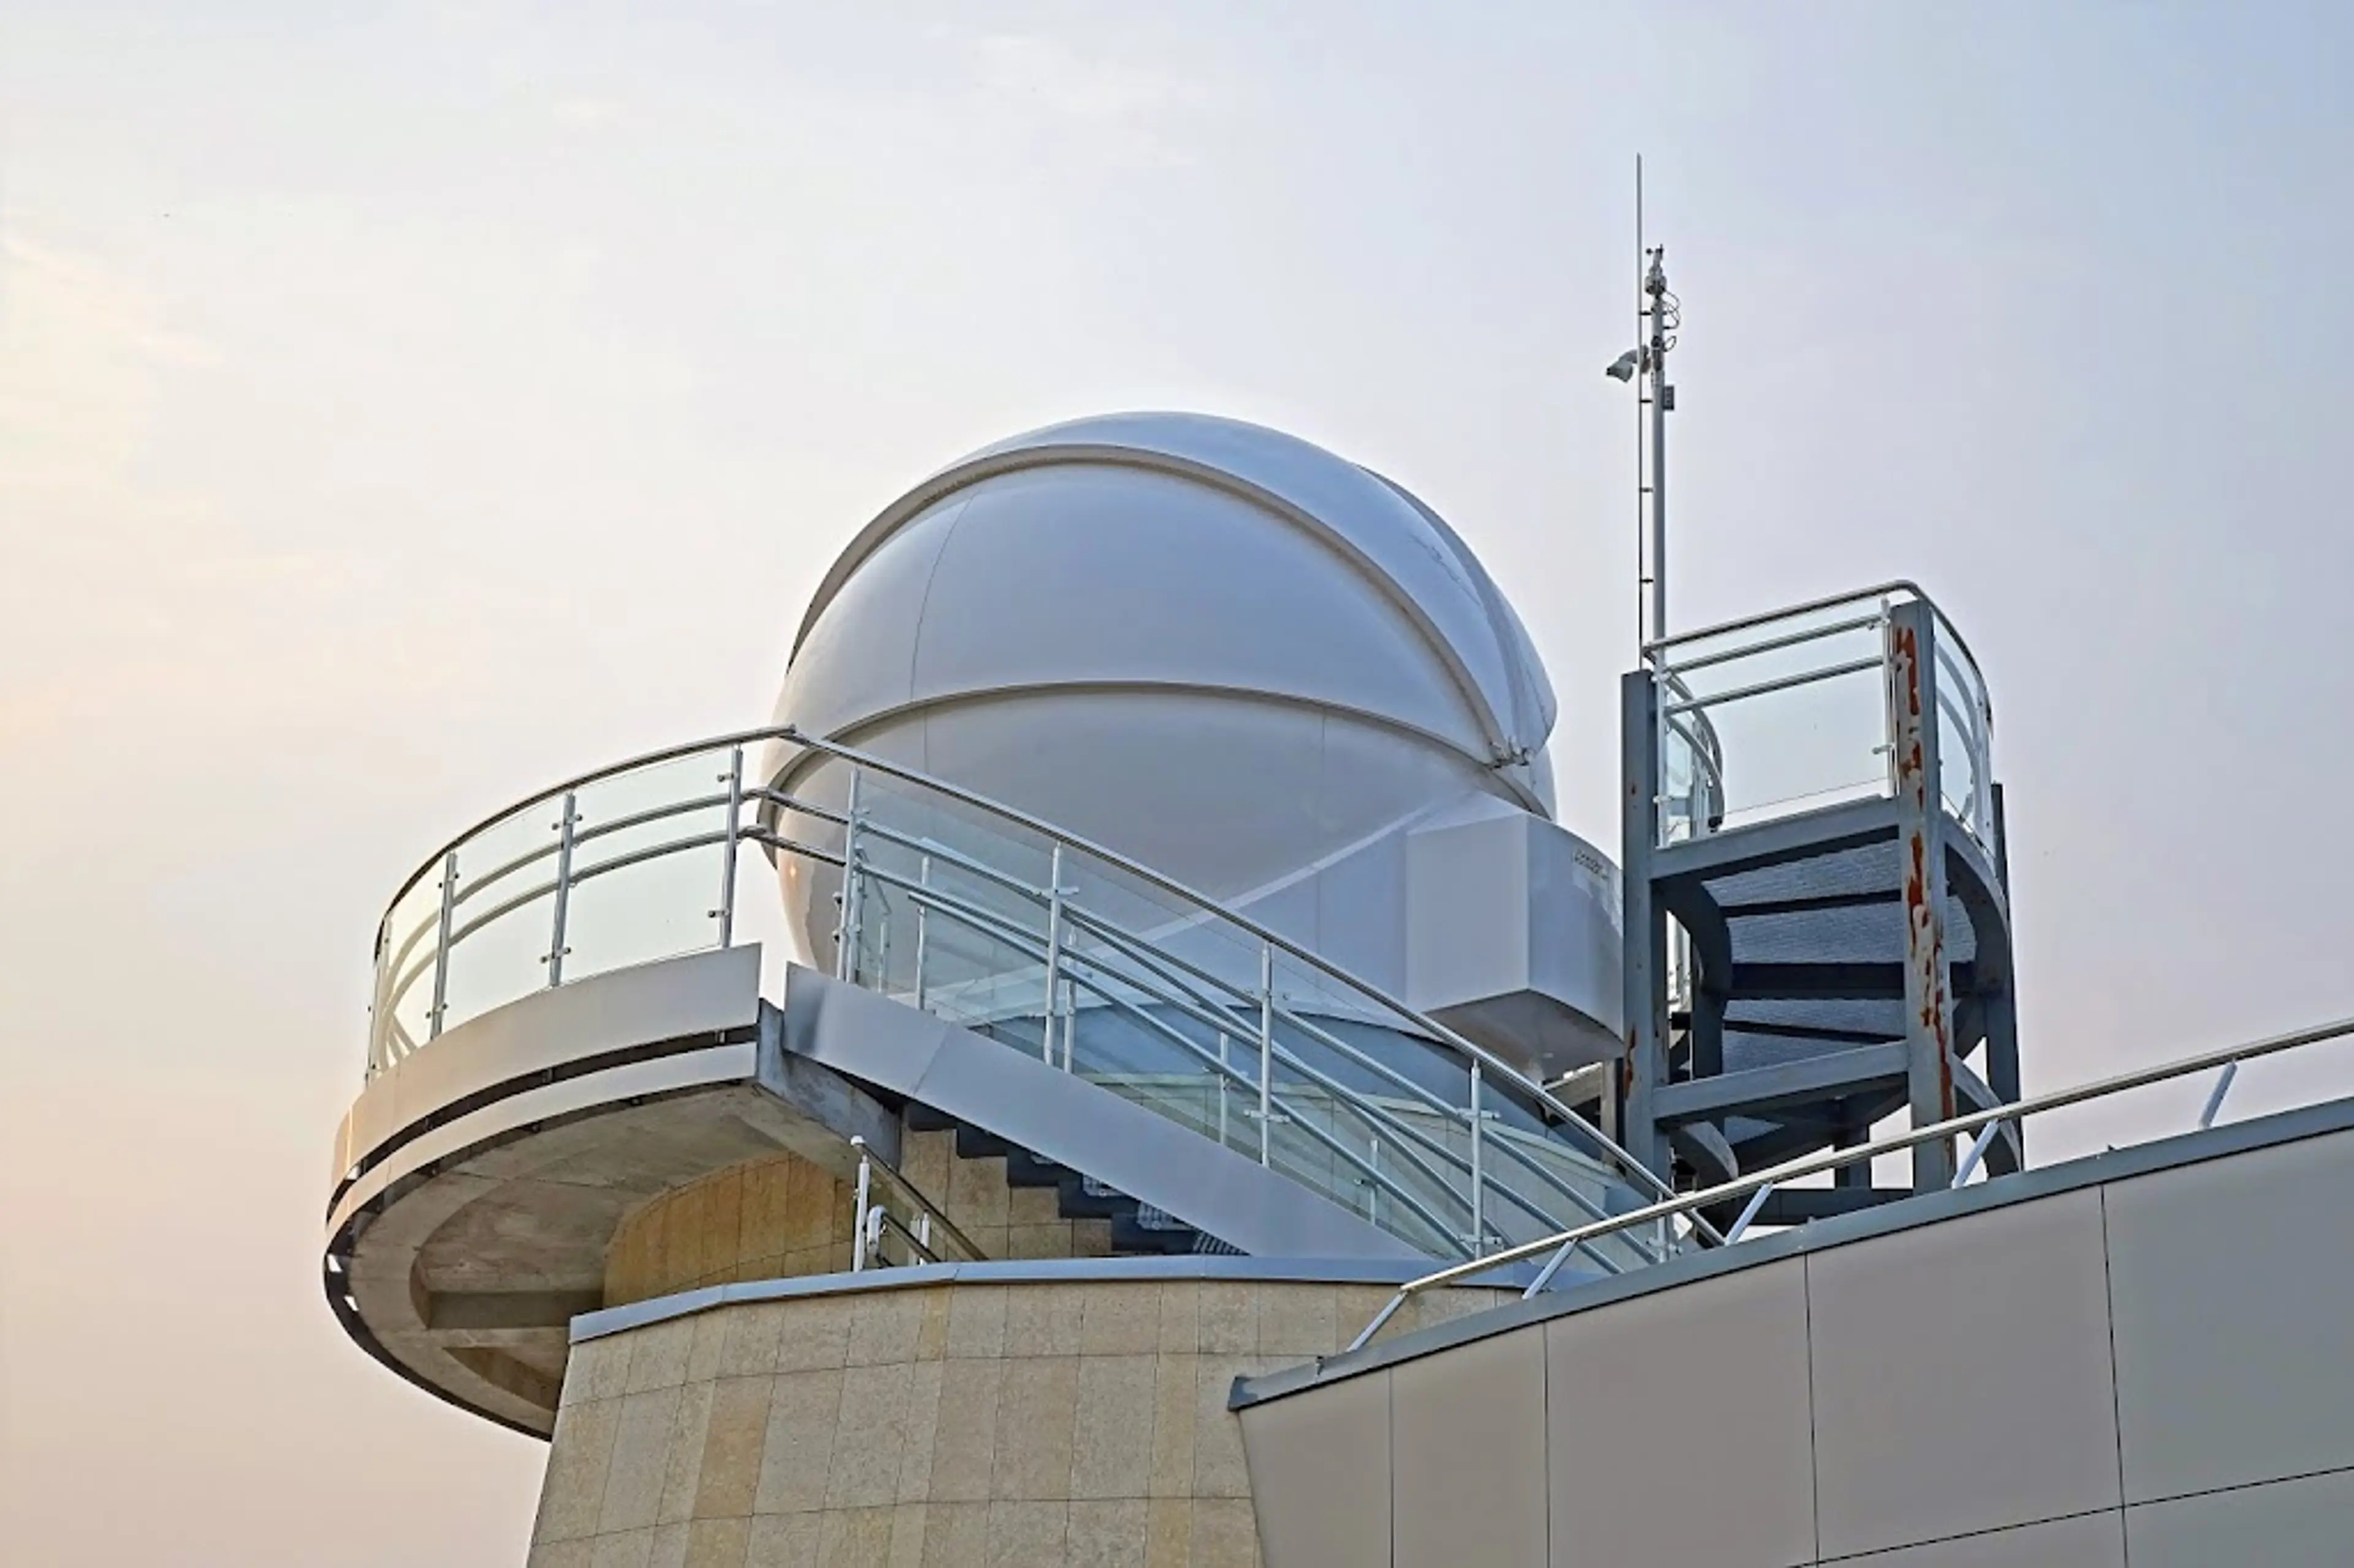 Kazan Planetarium